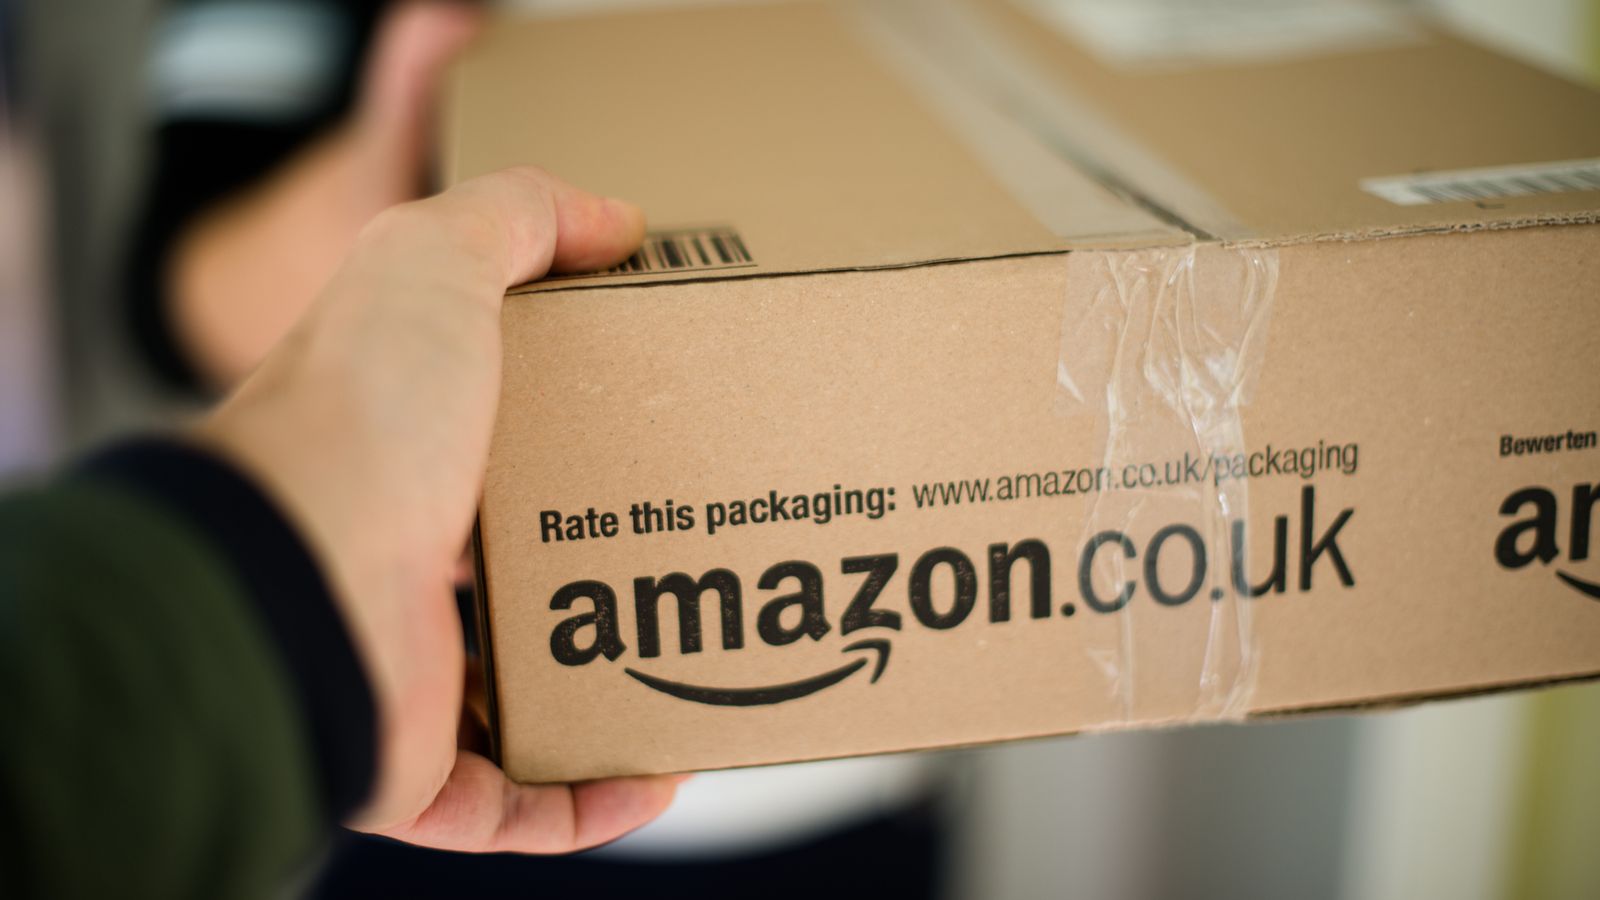 Online sales tax 'would punish British SMEs', Amazon warns Treasury